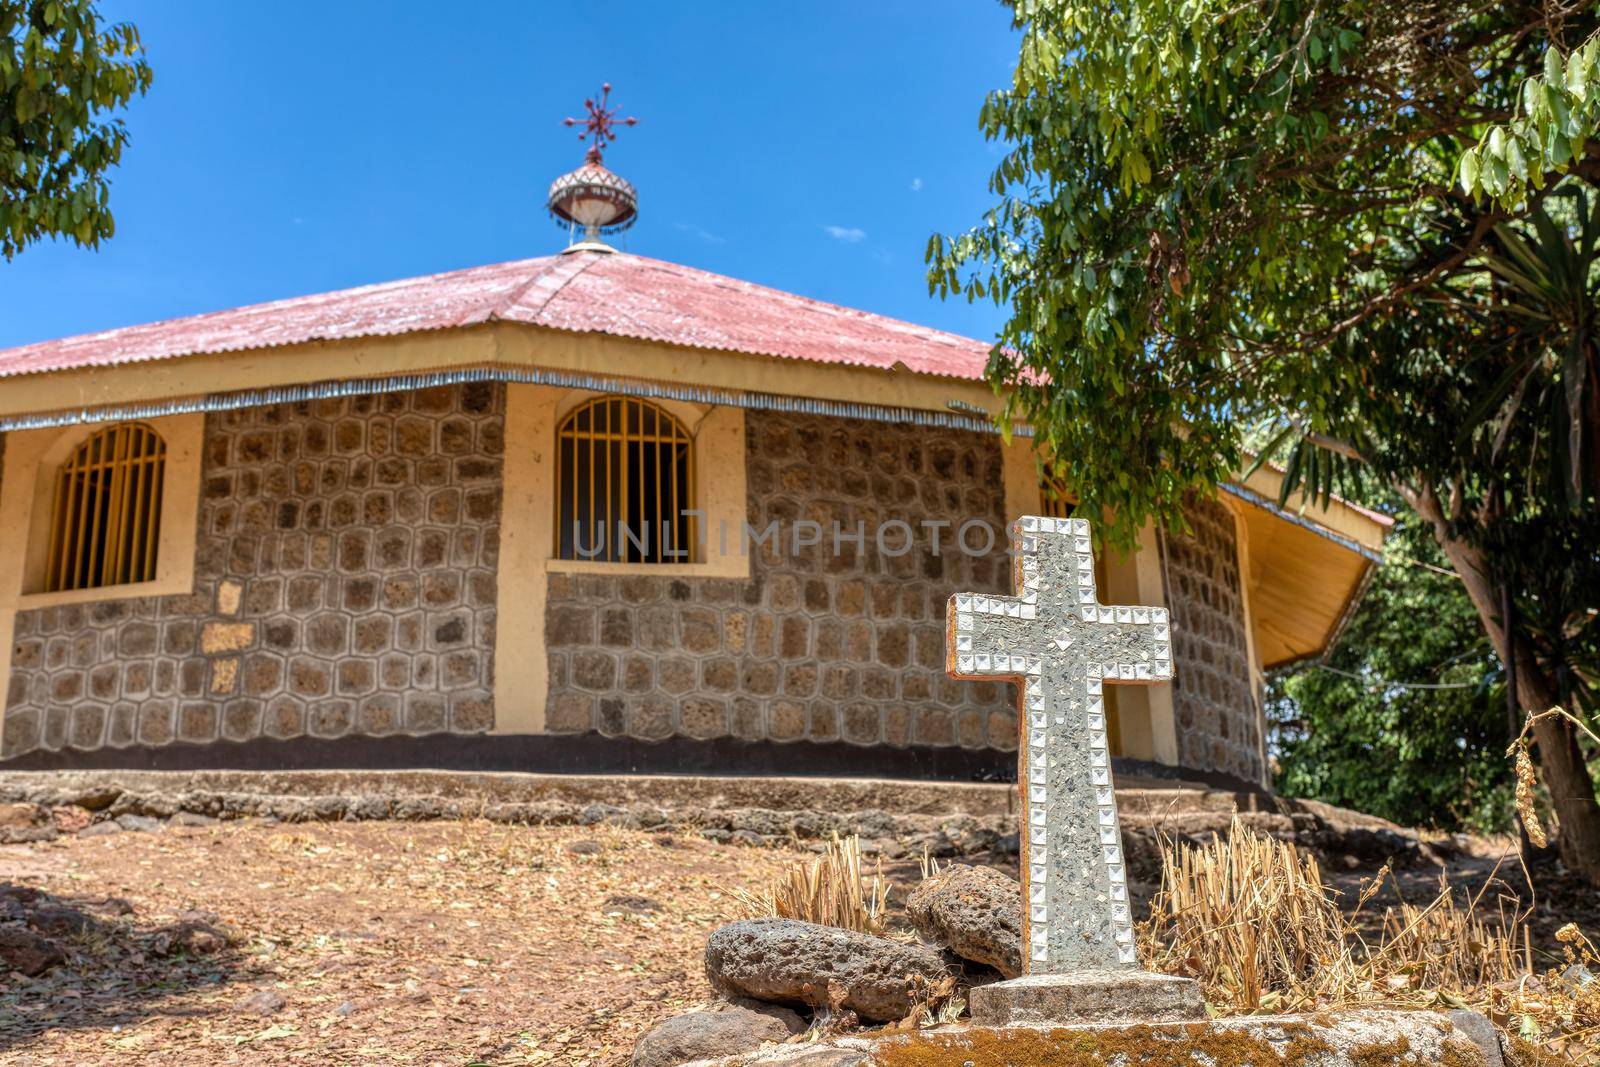 religious christian cross behind Entos Eyesu UNESCO Monastery situated on small island on lake Tana near Bahir Dar. Ethiopia Africa